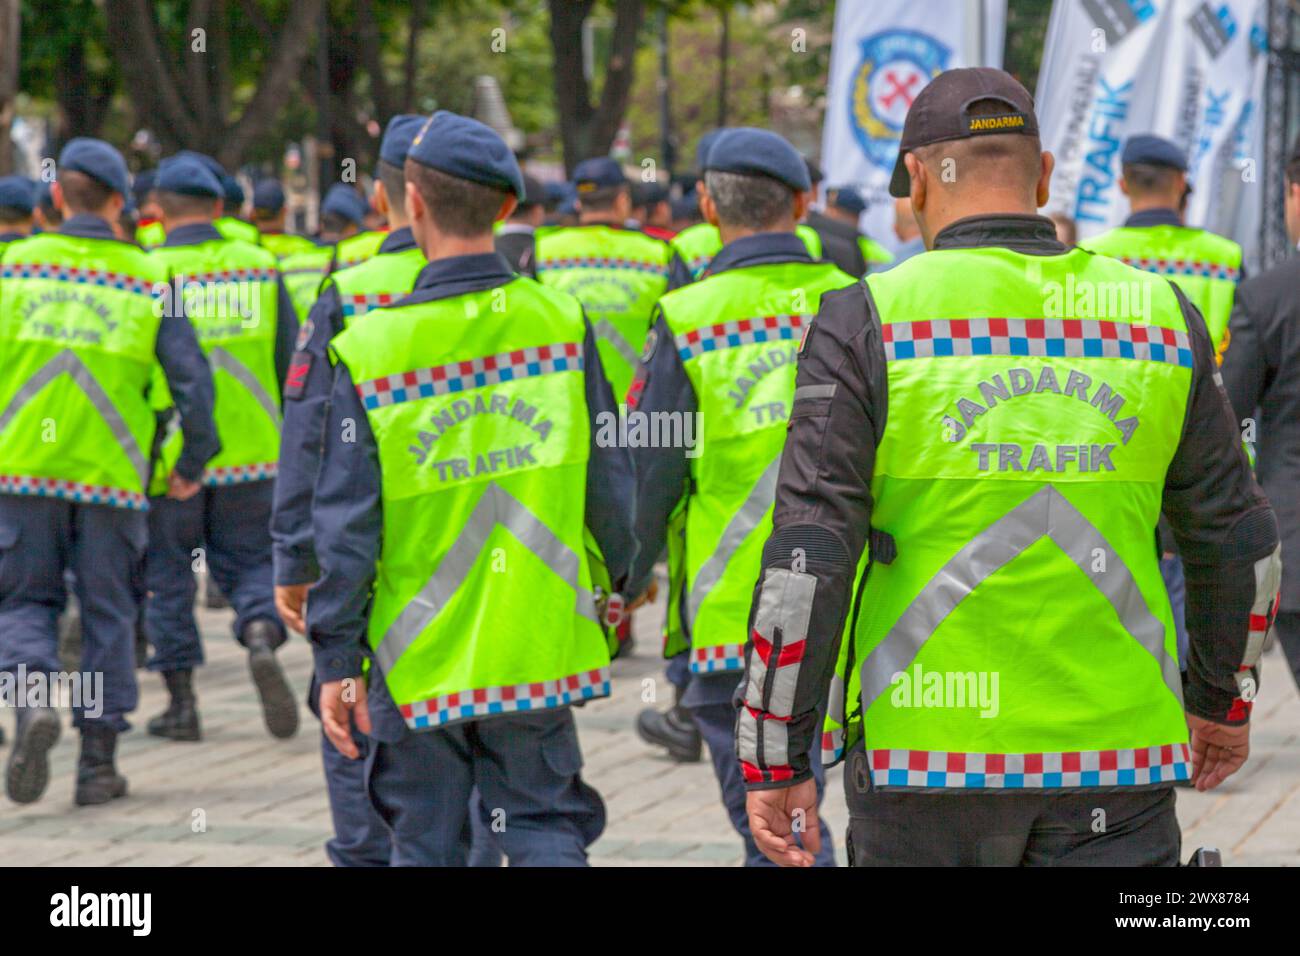 Istanbul, Turkey - May 09 2019: Officers of the Jandarma Trafik (Gendarmerie Traffic) patroling the street. Stock Photo